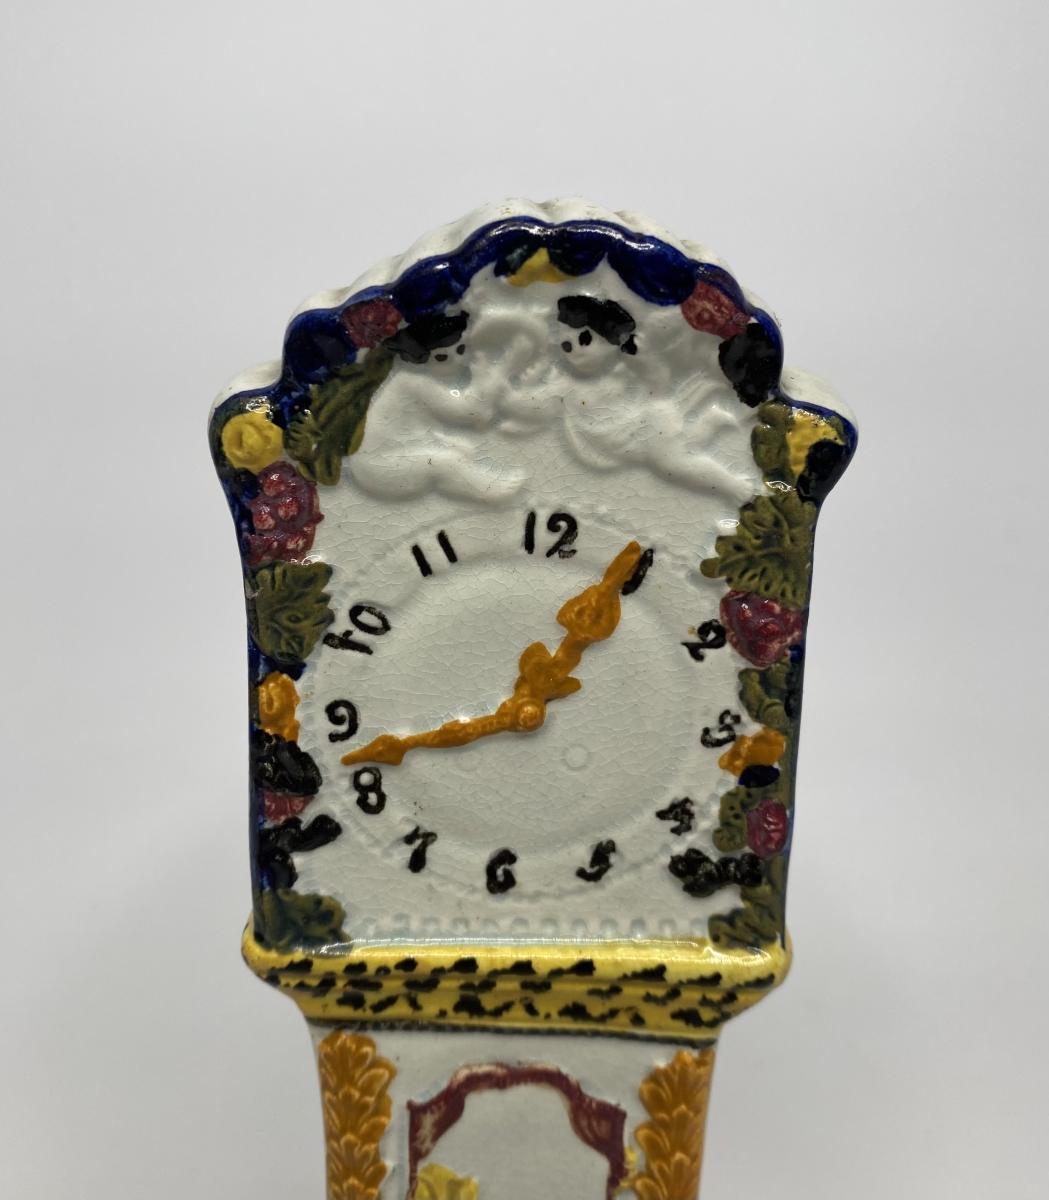 Yorkshire pottery Prattware Grandfather clock, circa 1810